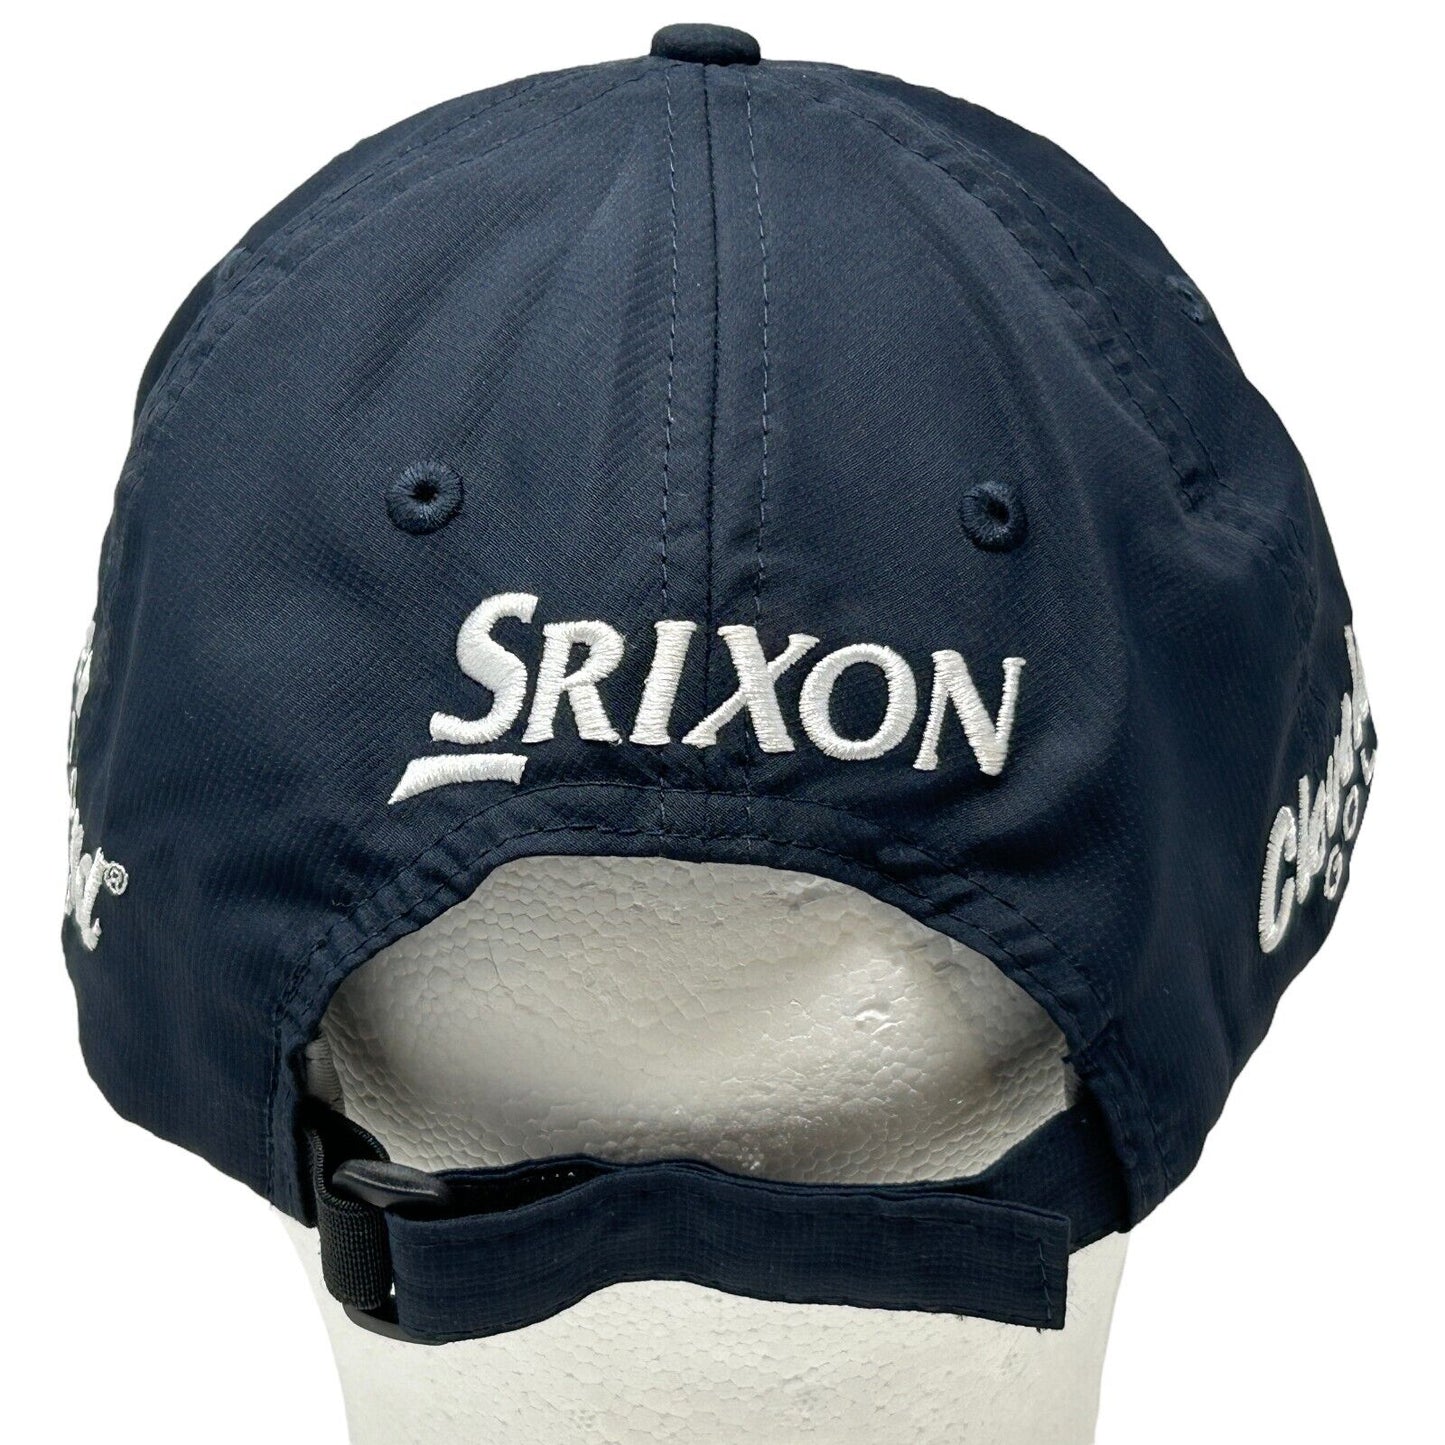 Srixon Cleveland Golf Hat Golfing Golfer Lightweight Blue Strapback Baseball Cap